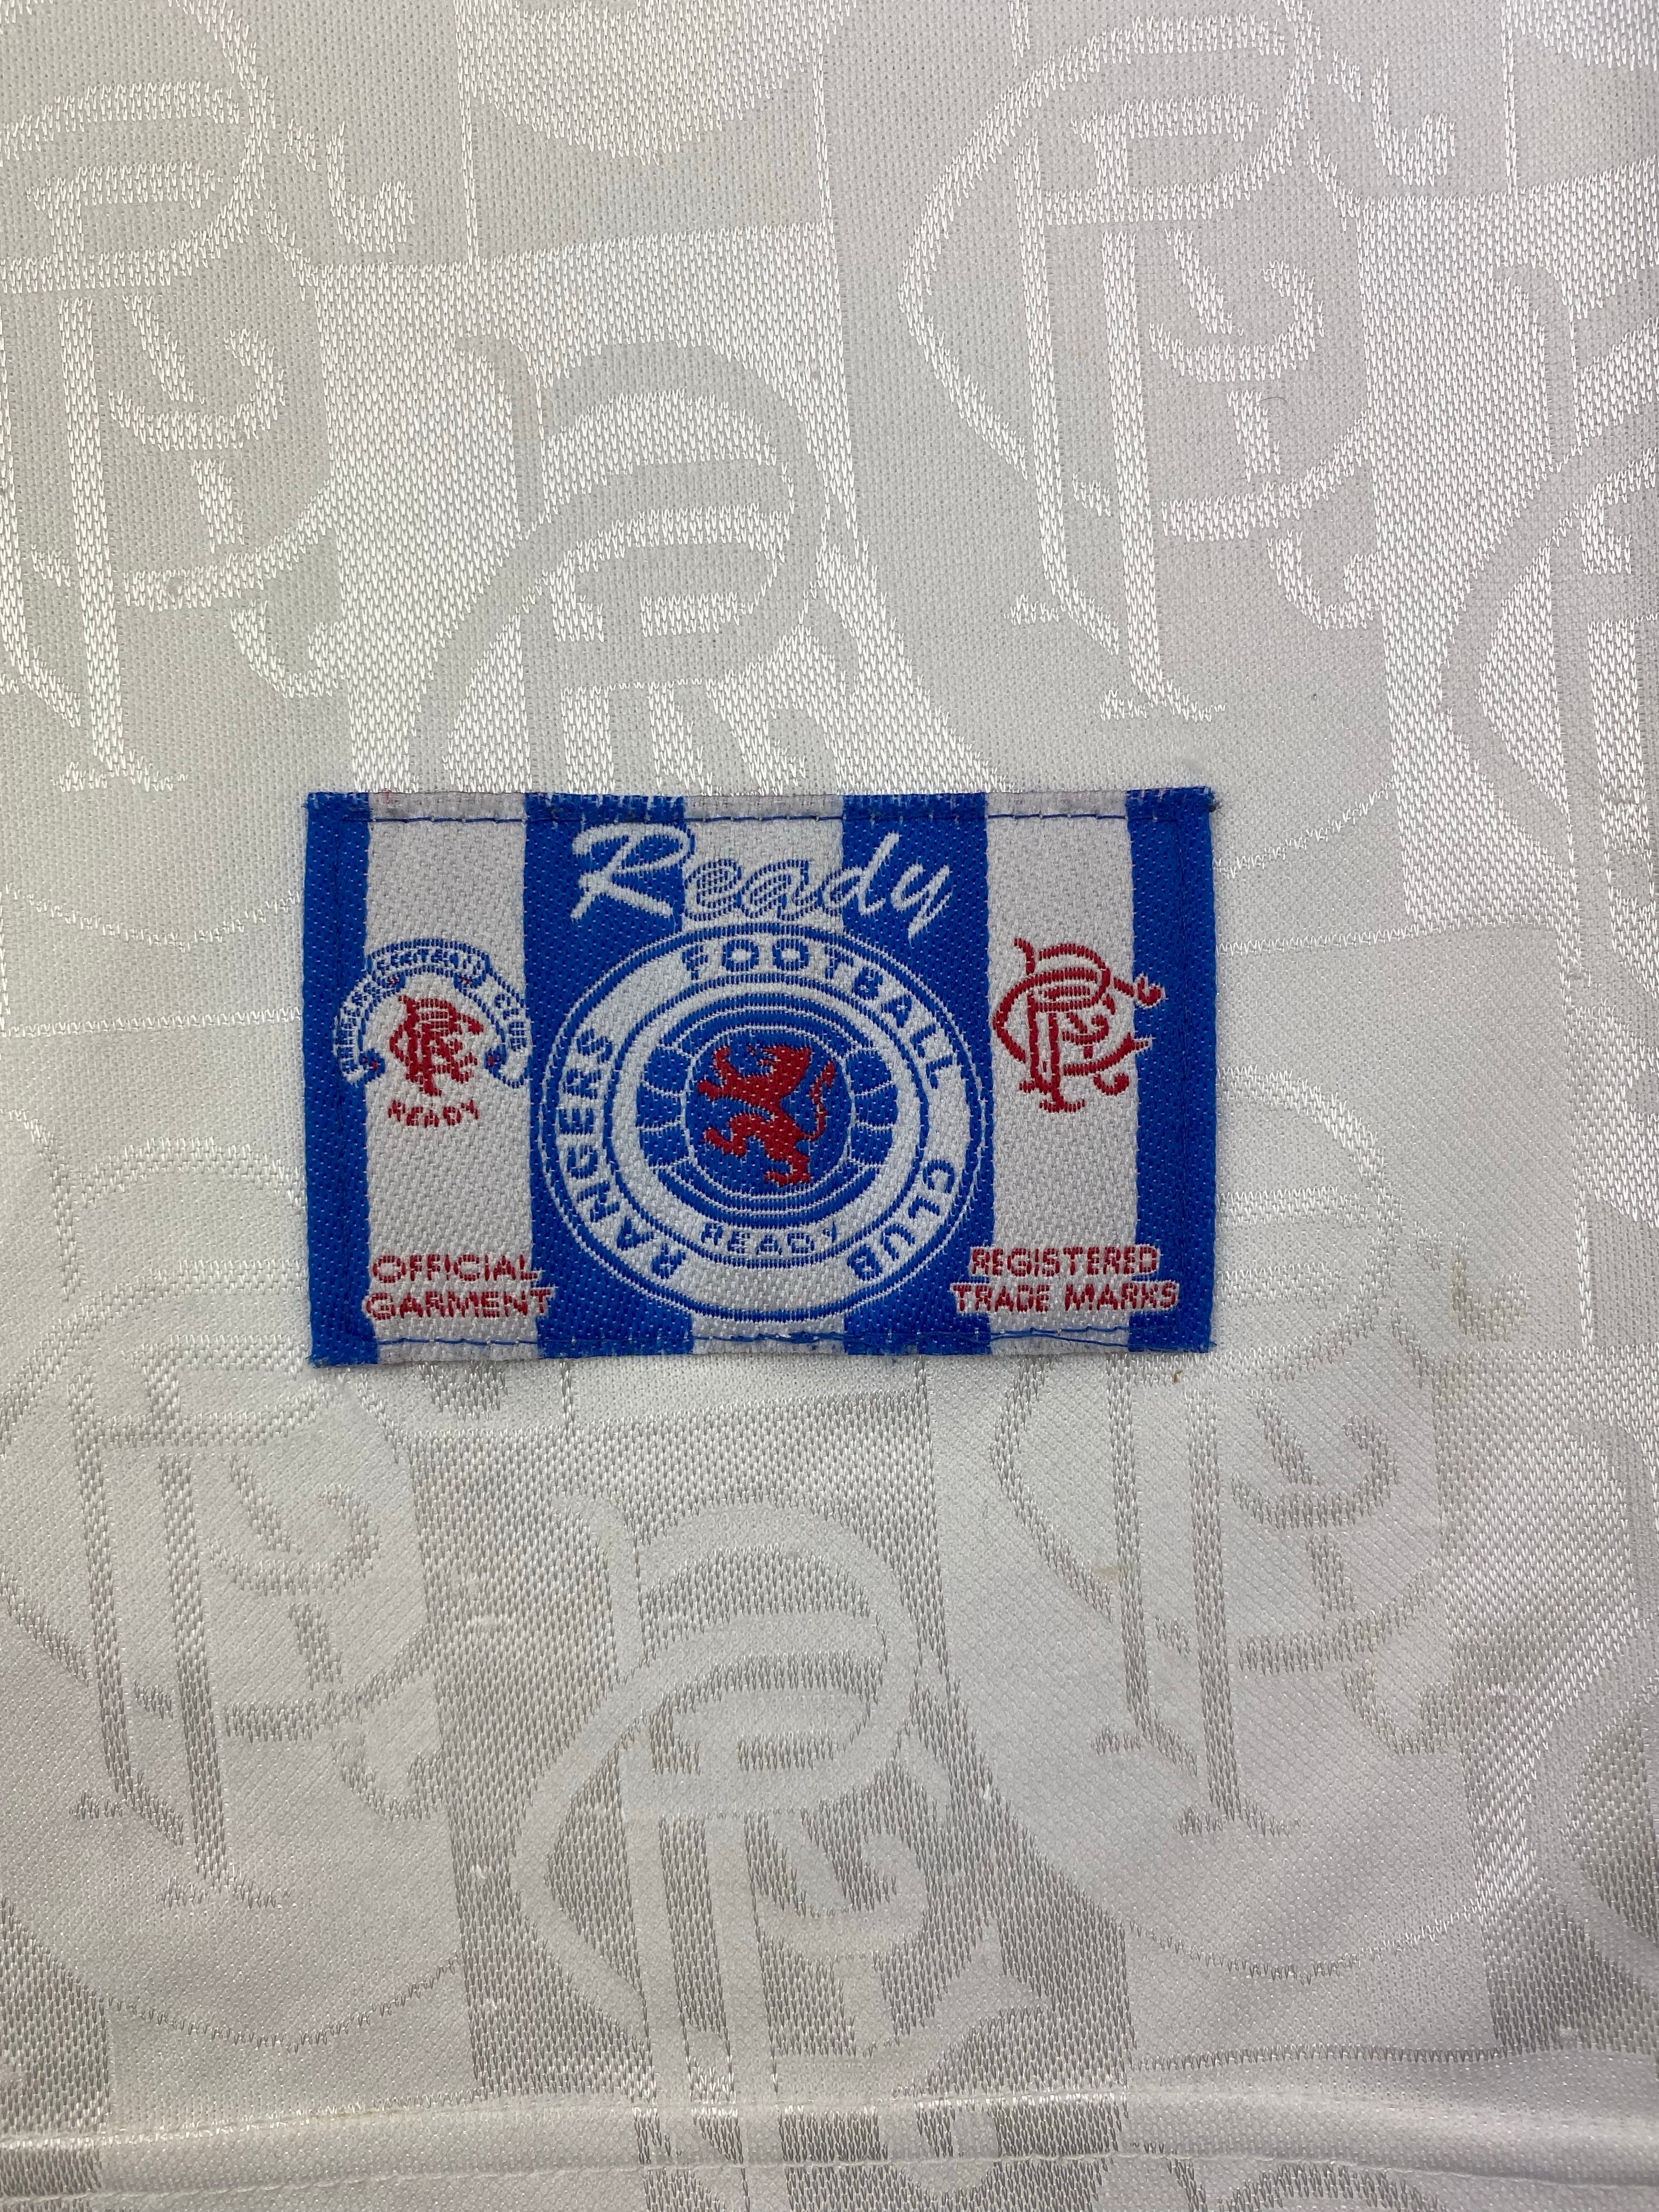 1996/97 Rangers Away Shirt (S) 7.5/10 – Greatest Kits